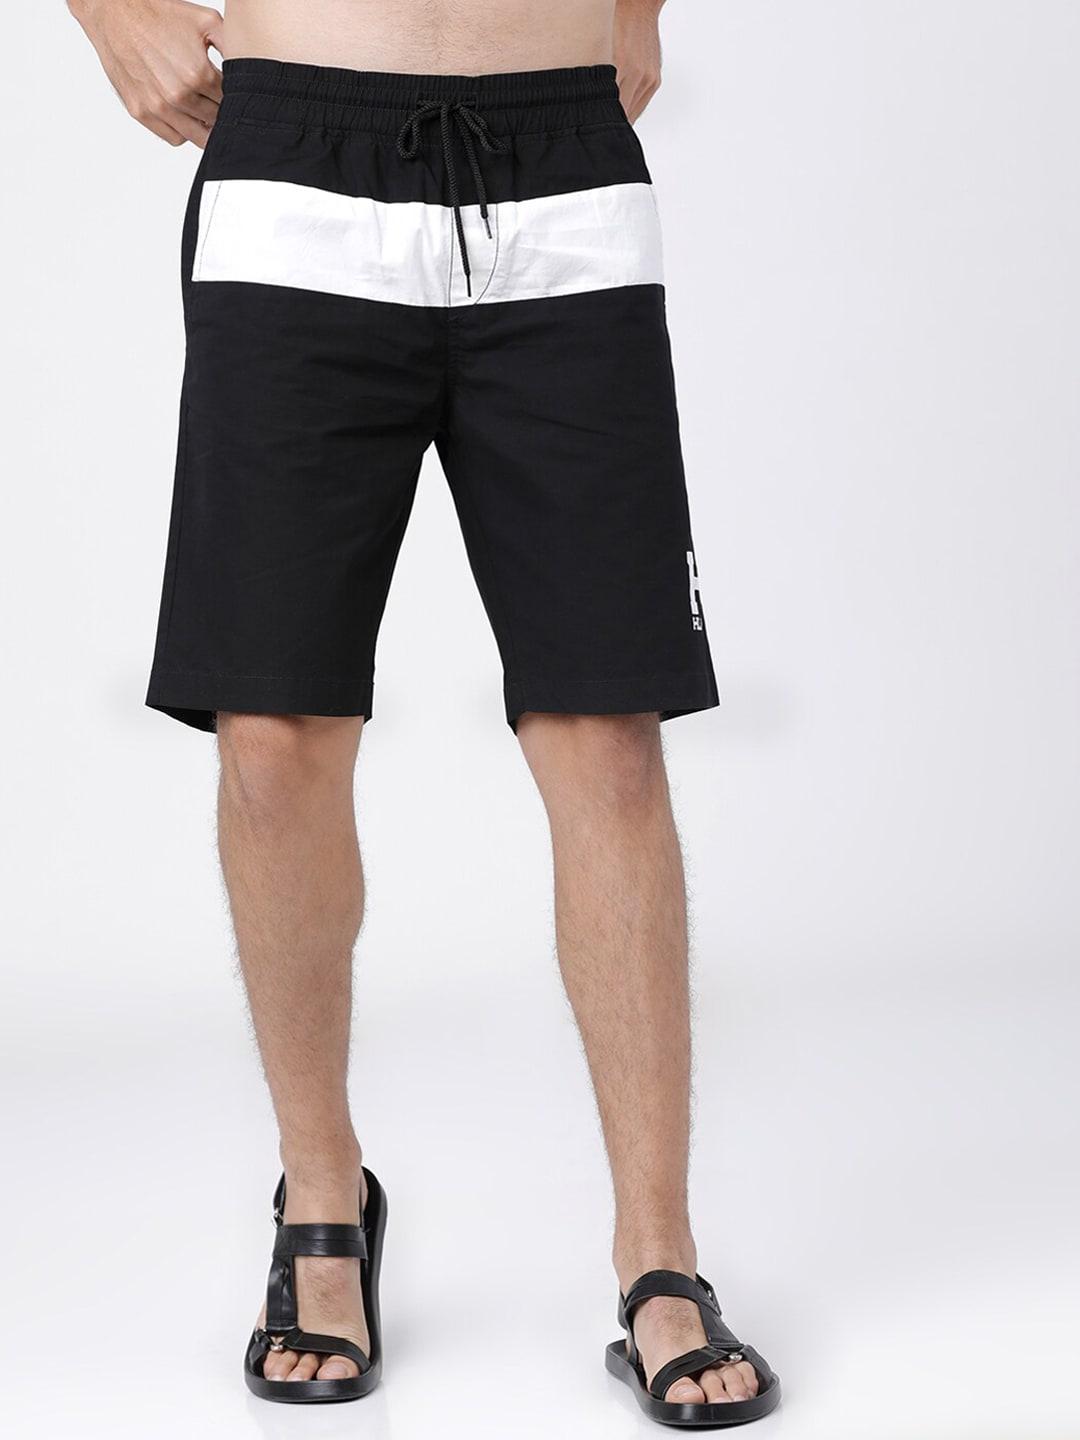 highlander men black & white colourblocked slim fit mid-rise regular shorts